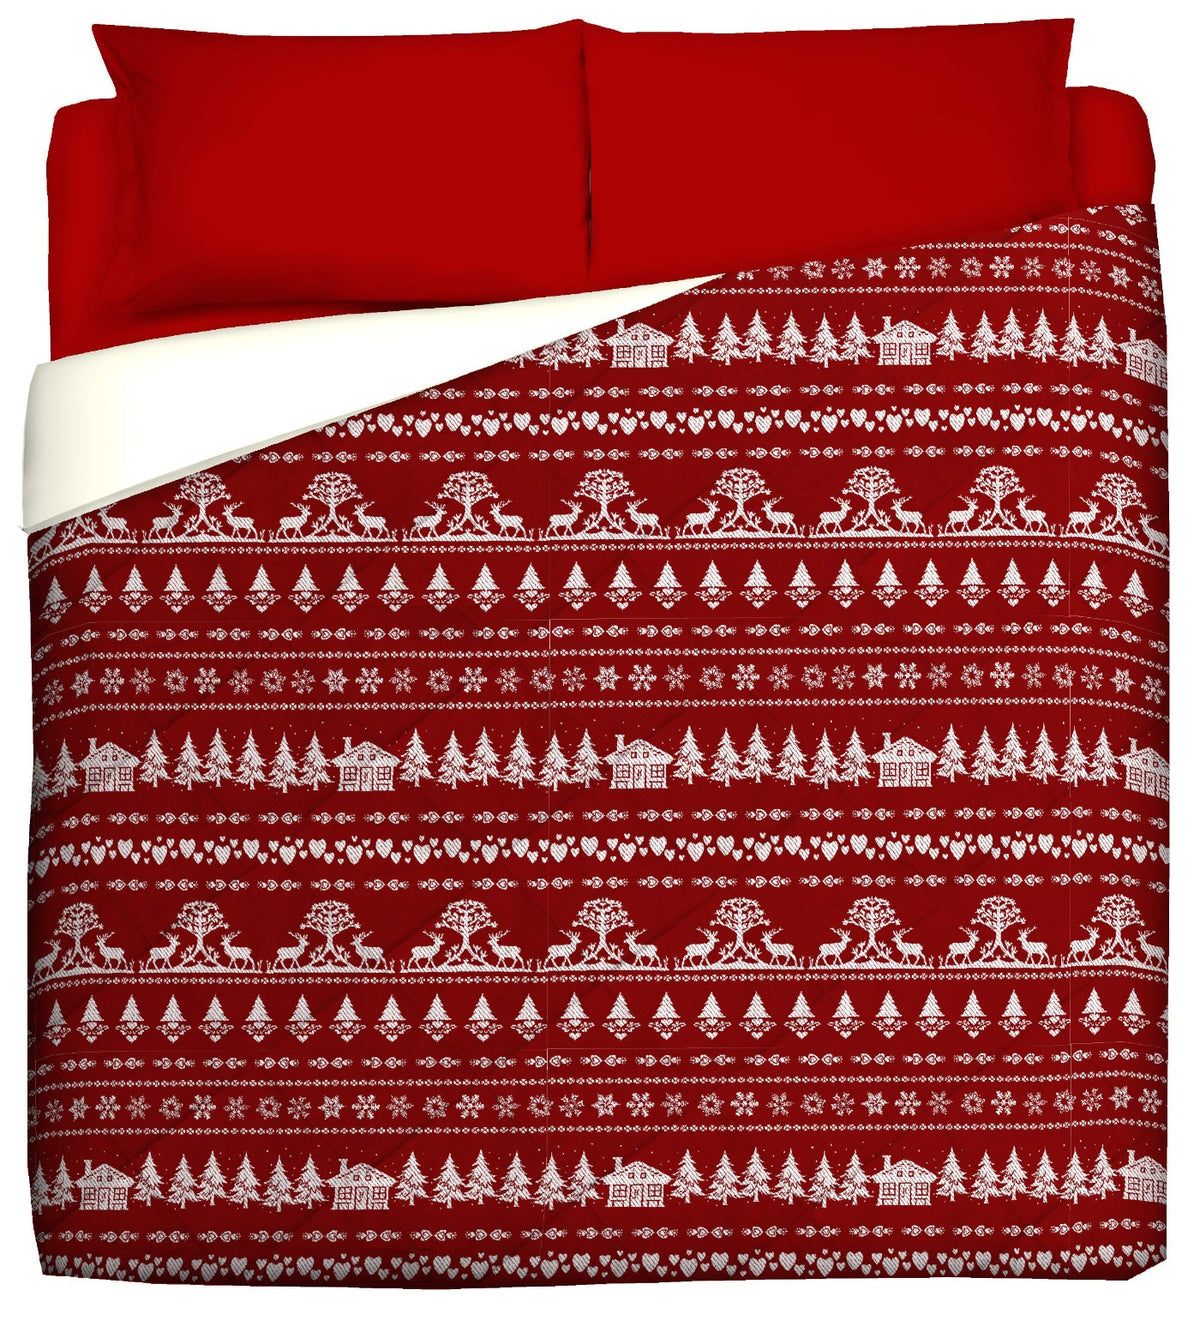 Reindeer and cabin winter quilt